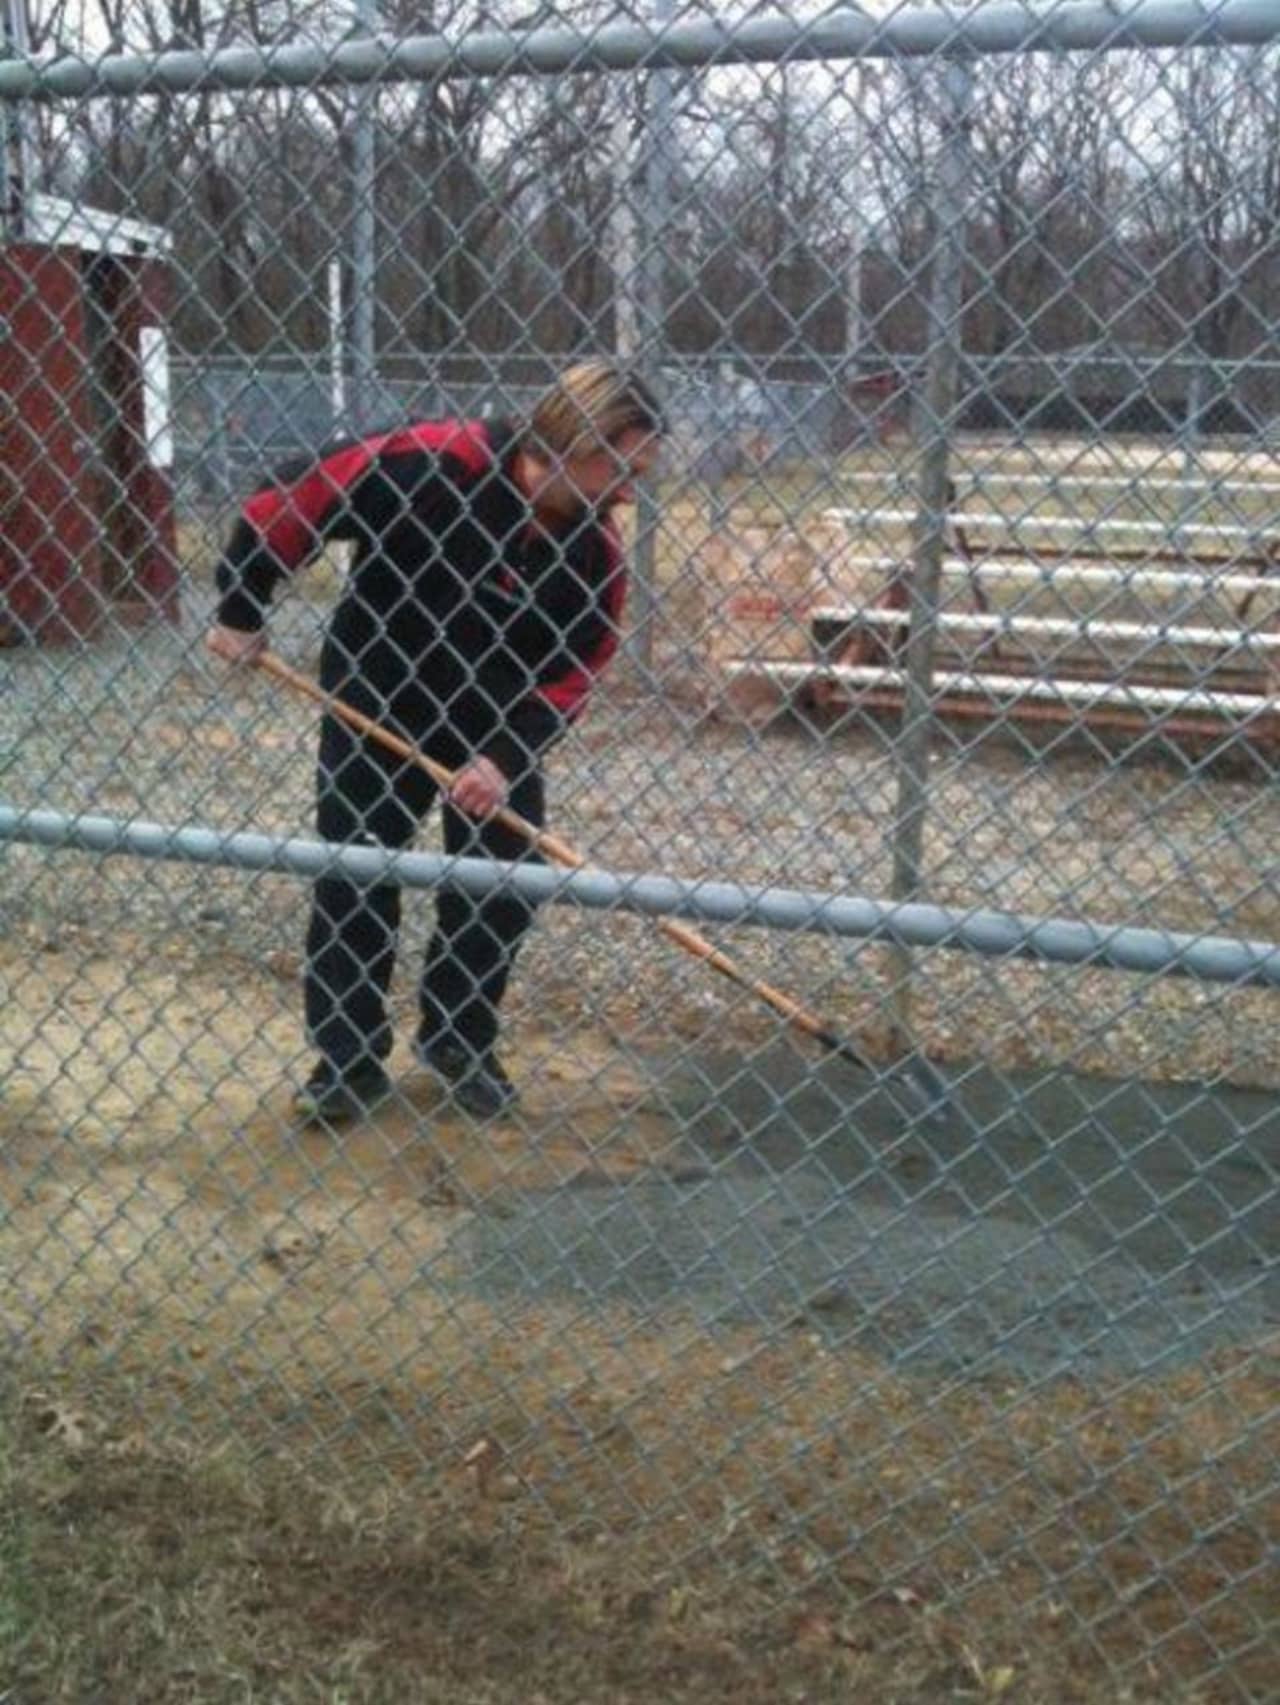 Joe Kleinot works on the Pompton Lakes baseball fields.